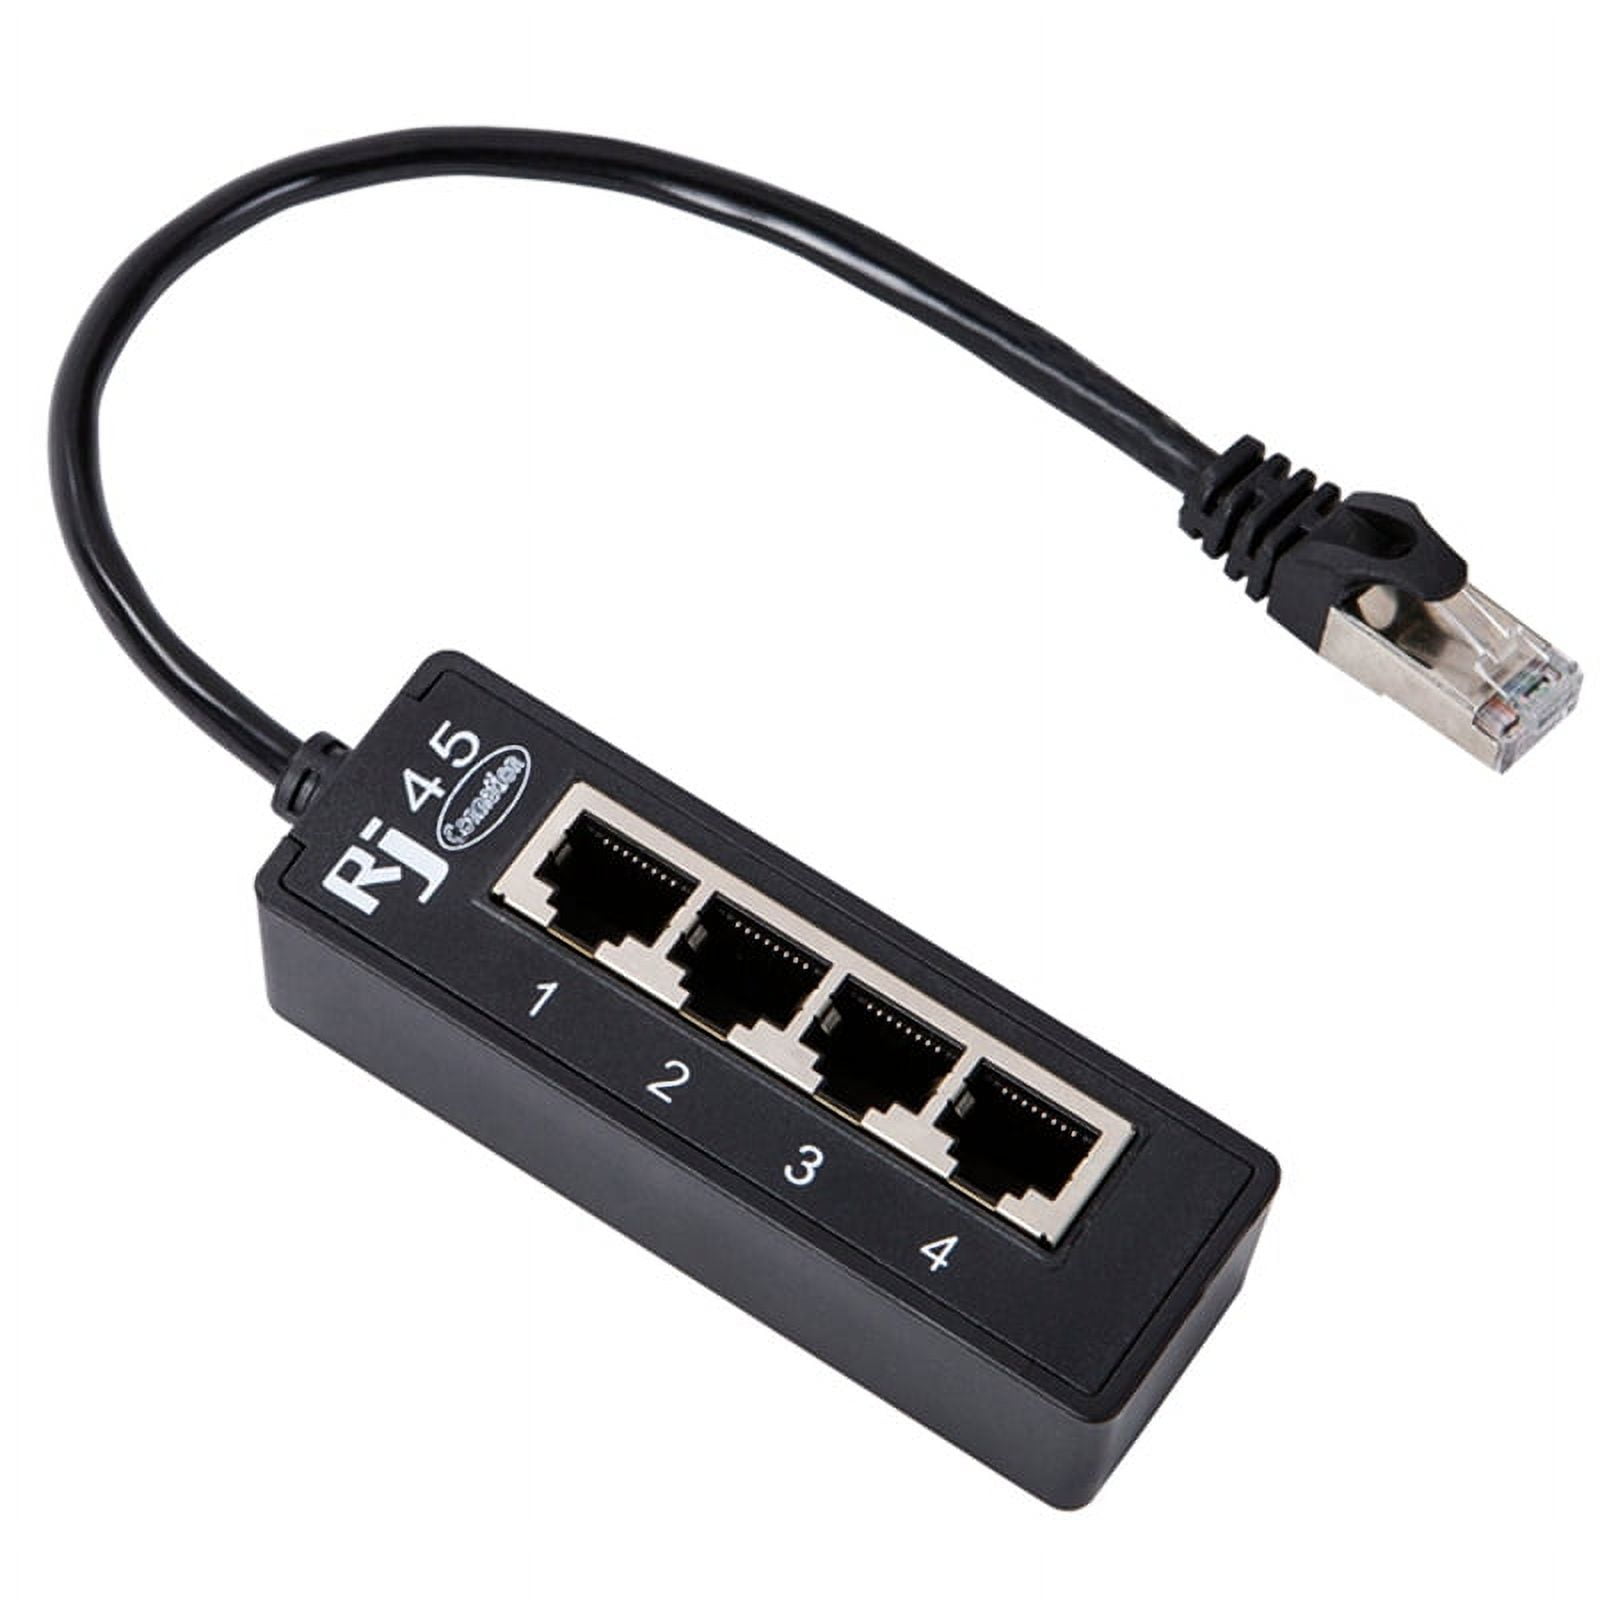 NEW RJ45 Splitter Adapter LAN Ethernet Cable 1-4 Way Female Port Connector  Plug